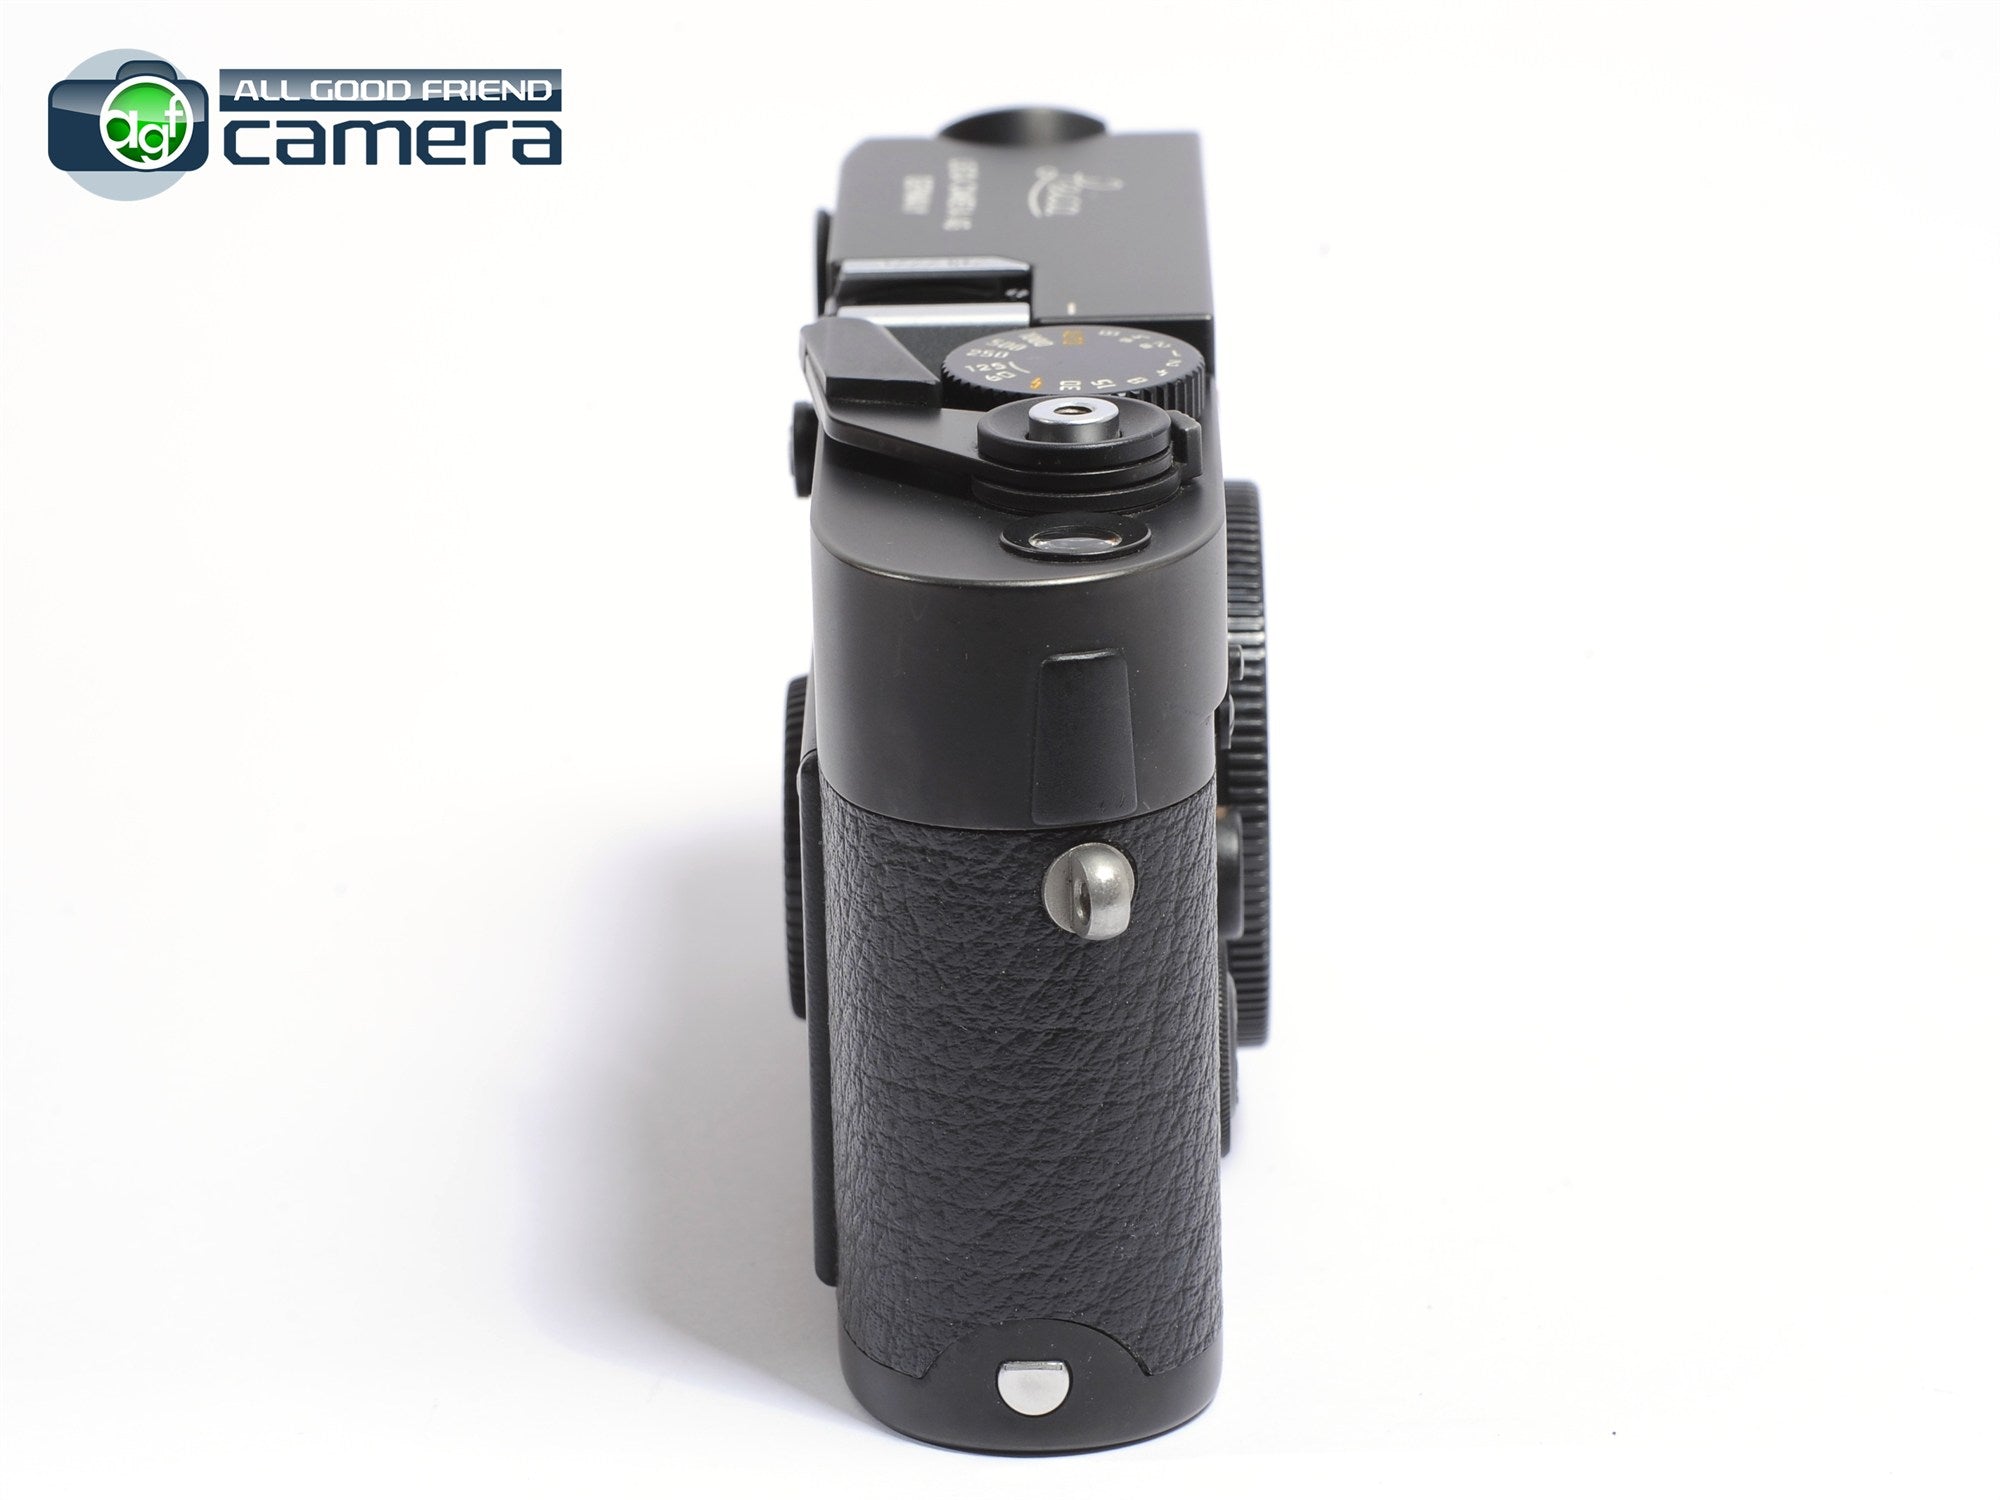 Leica M7 Film Rangefinder Camera 0.72 Black Japan Version *EX+ in 